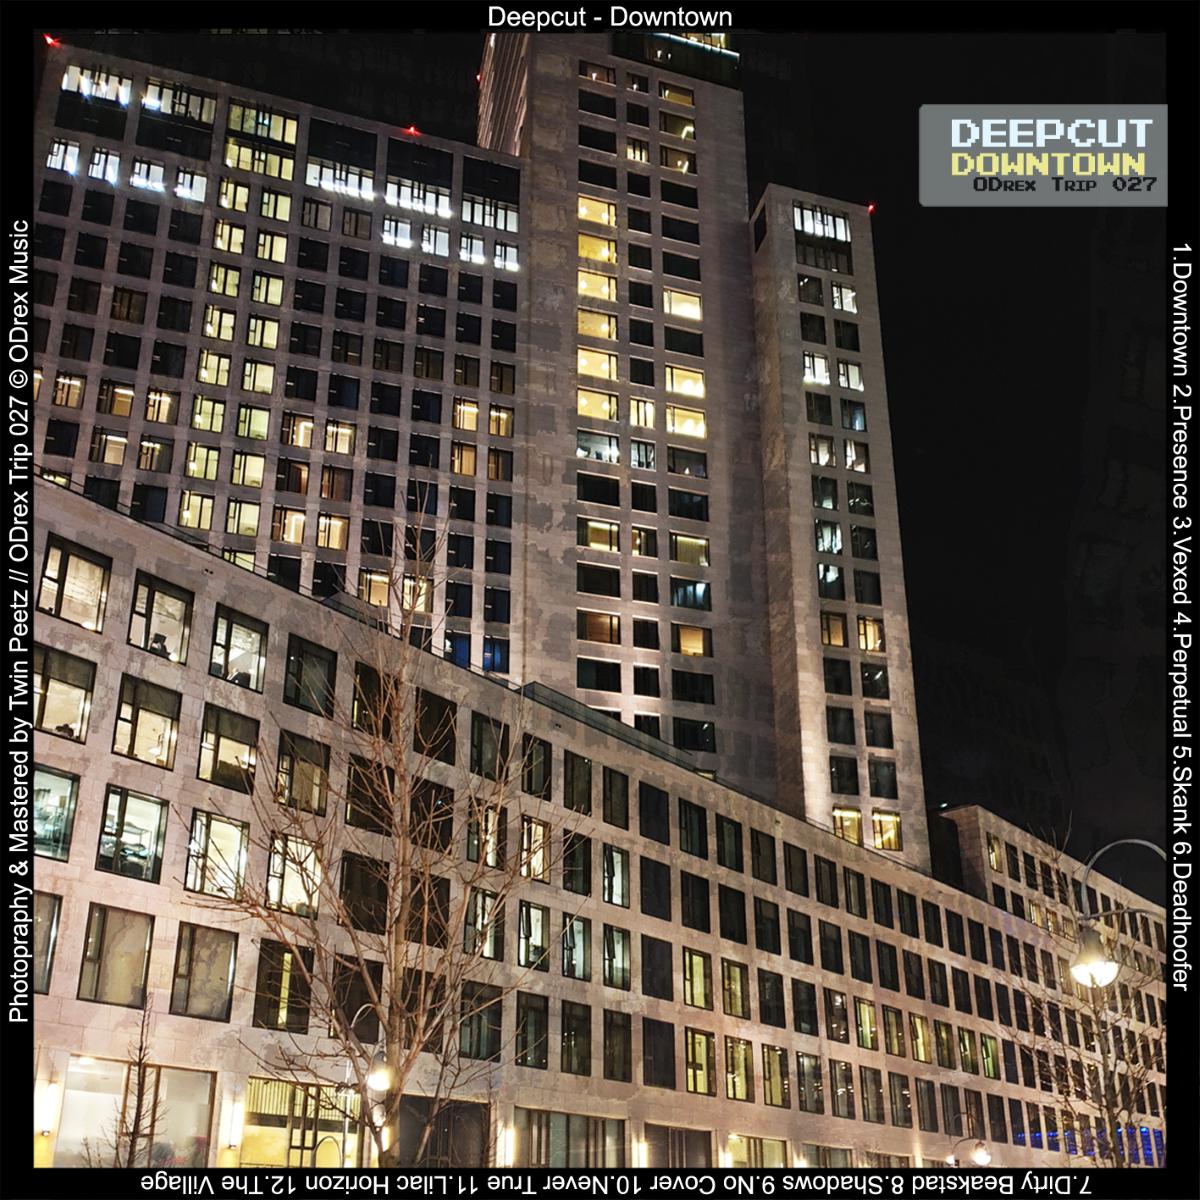 image cover: Deepcut - Downtown / ODrex Trip 027